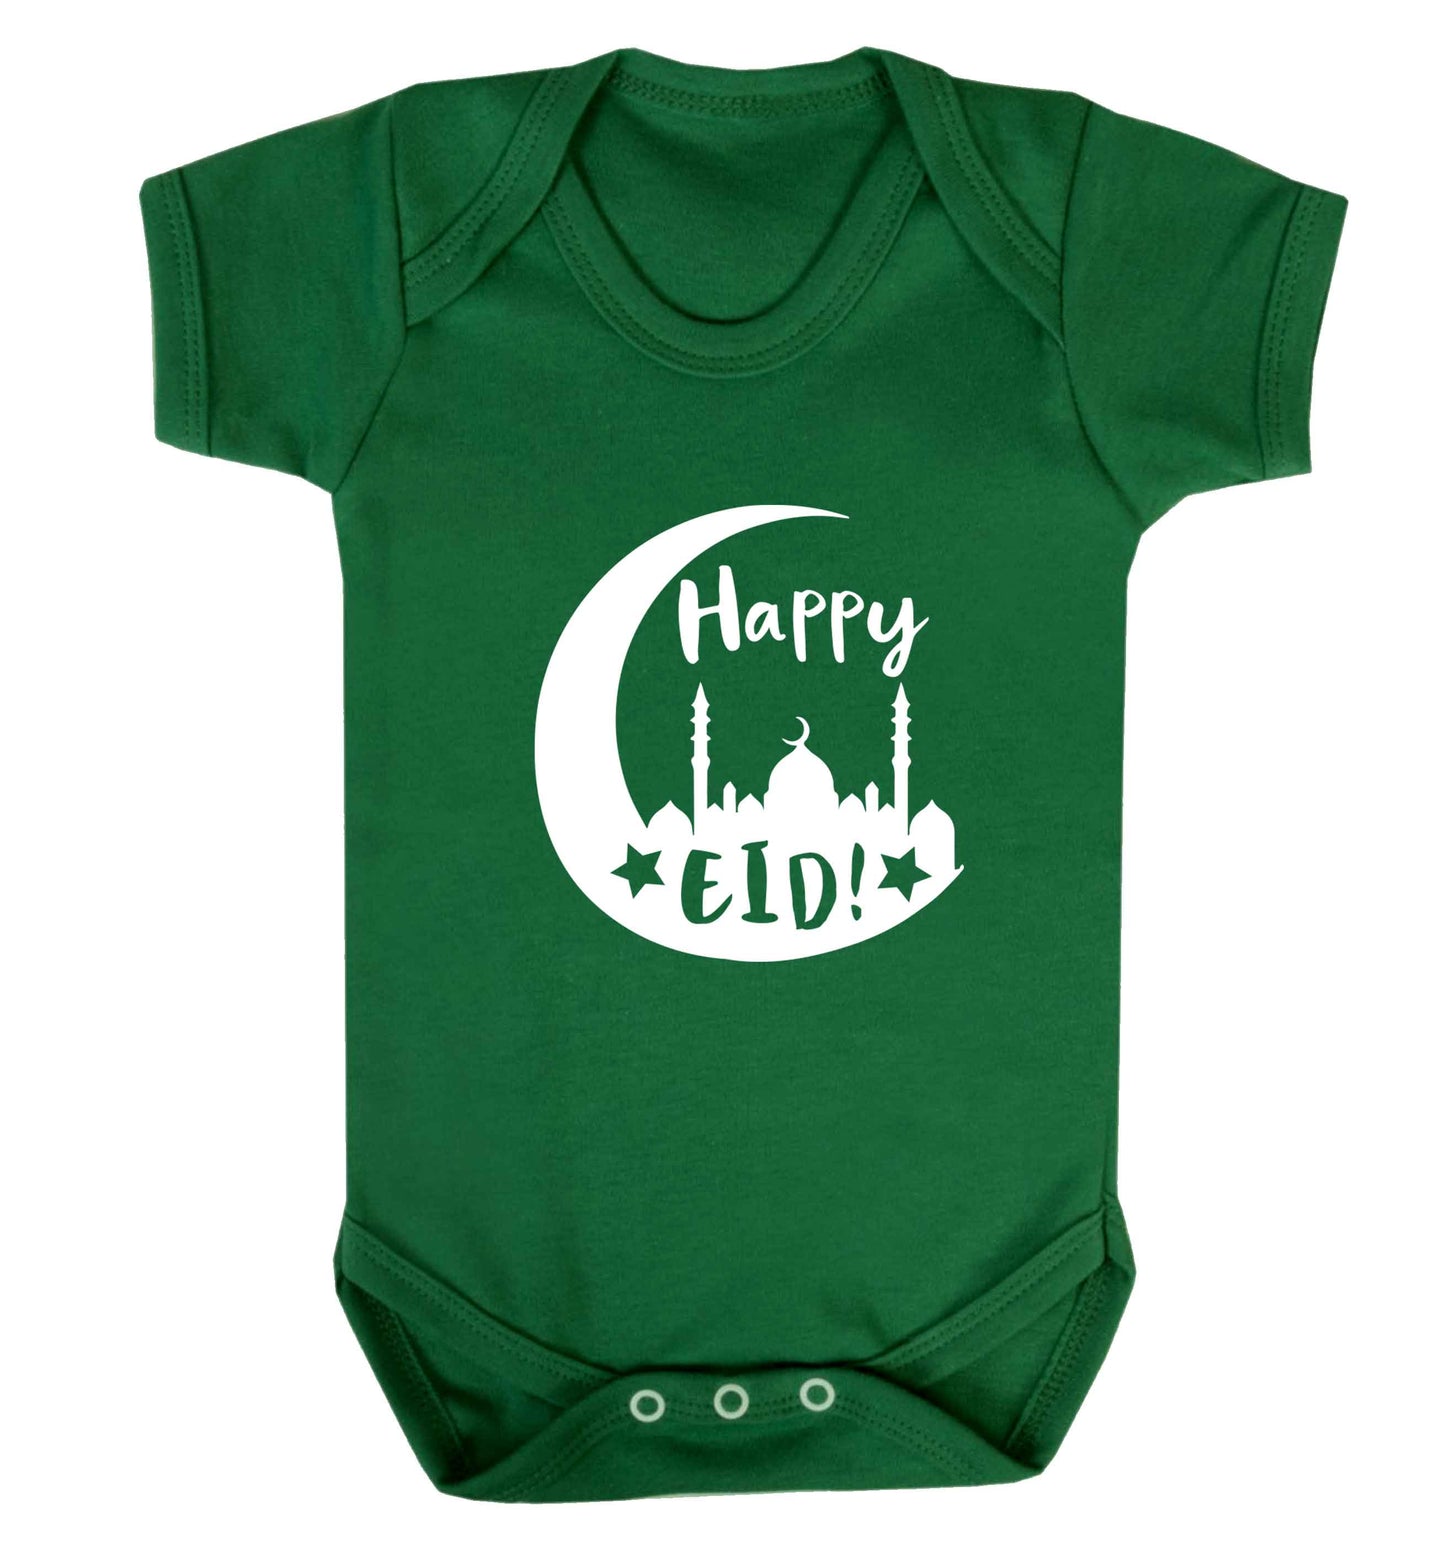 Happy Eid baby vest green 18-24 months